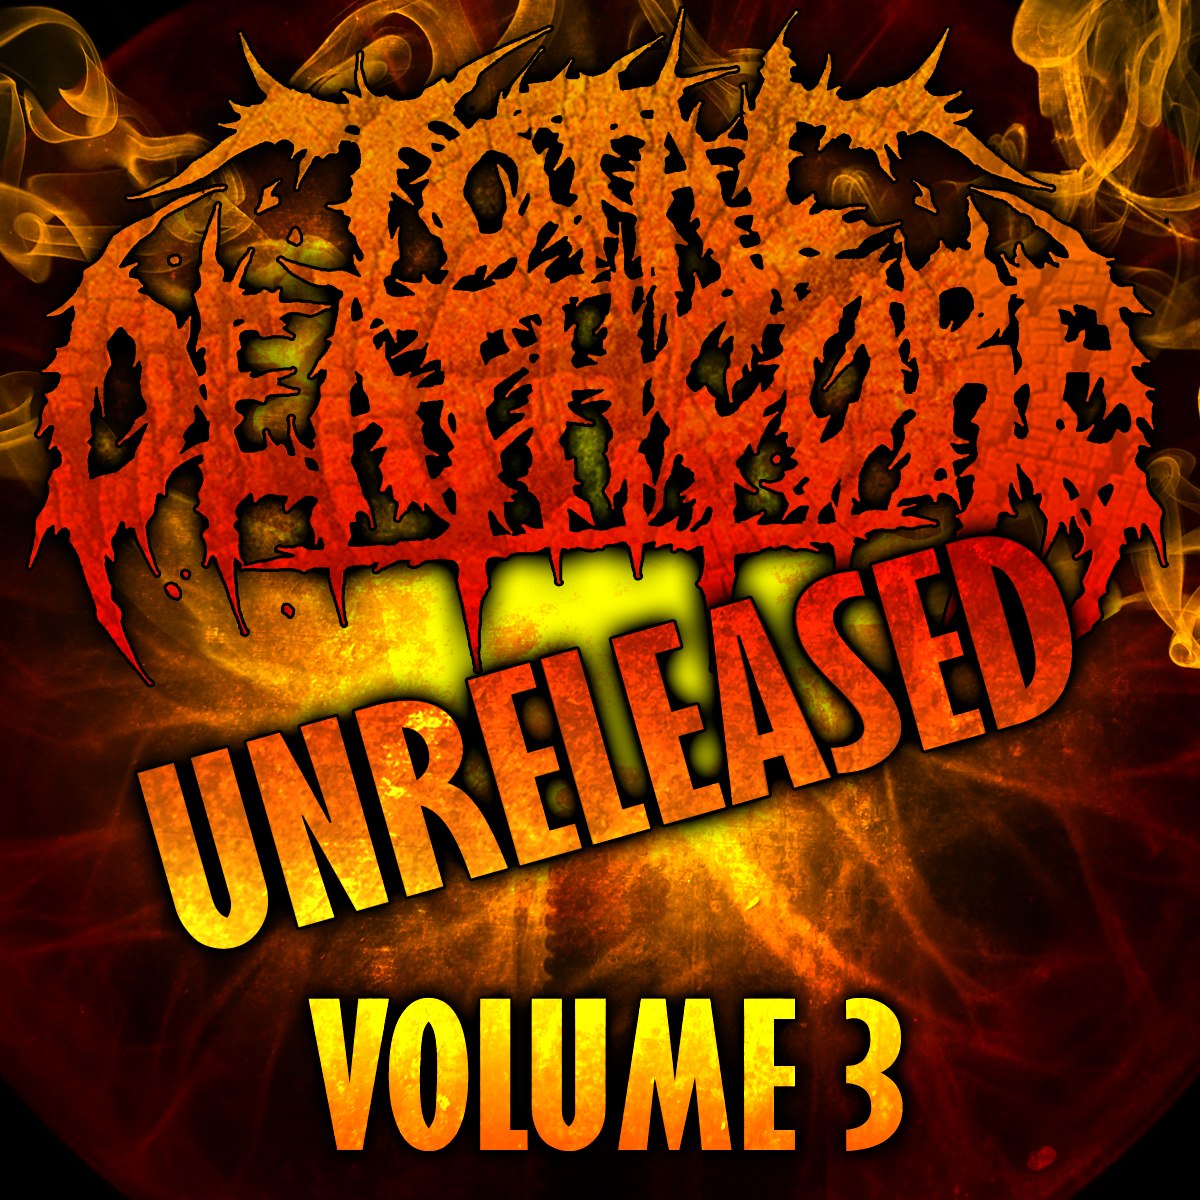 Total Deathcore Volume 3 Unreleased